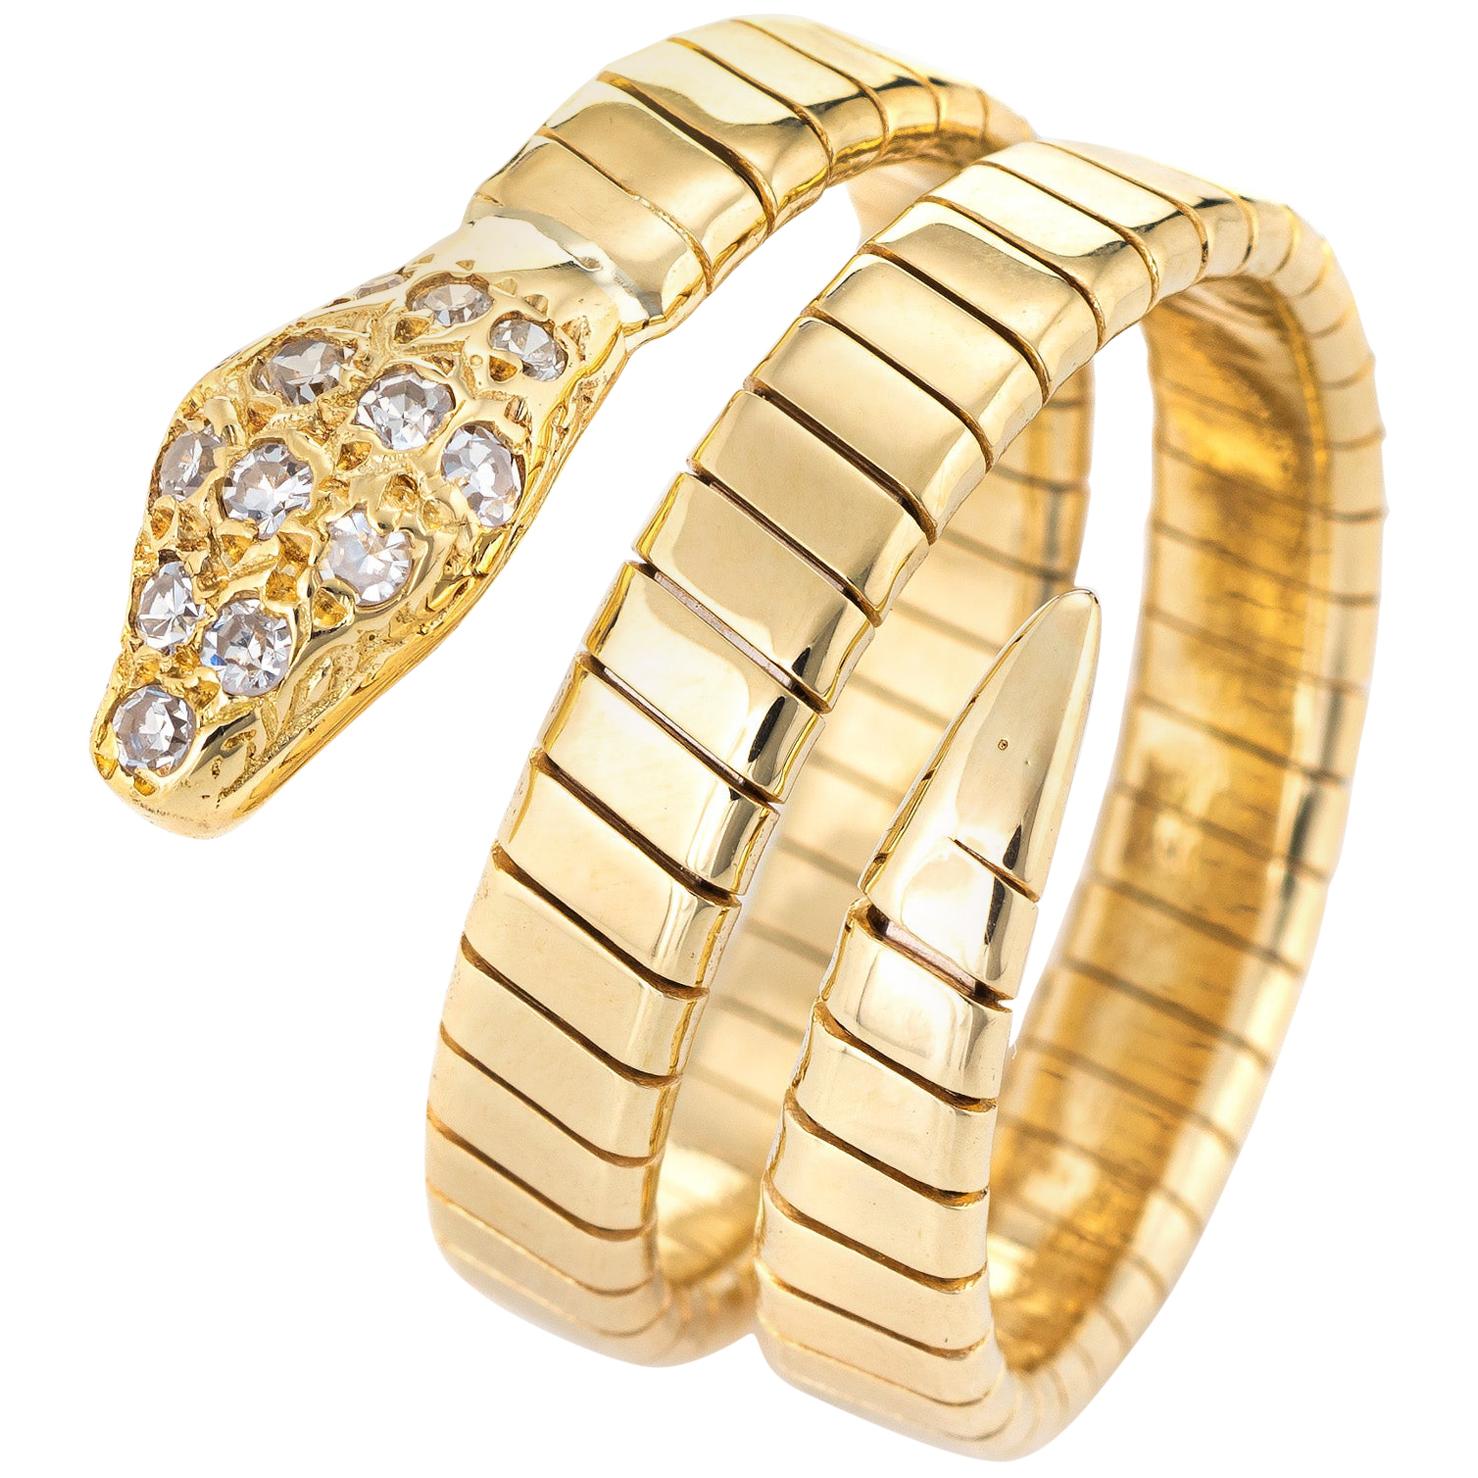 Vintage Diamond Snake Ring 18 Karat Yellow Gold Coiled Band Estate Fine Jewelry